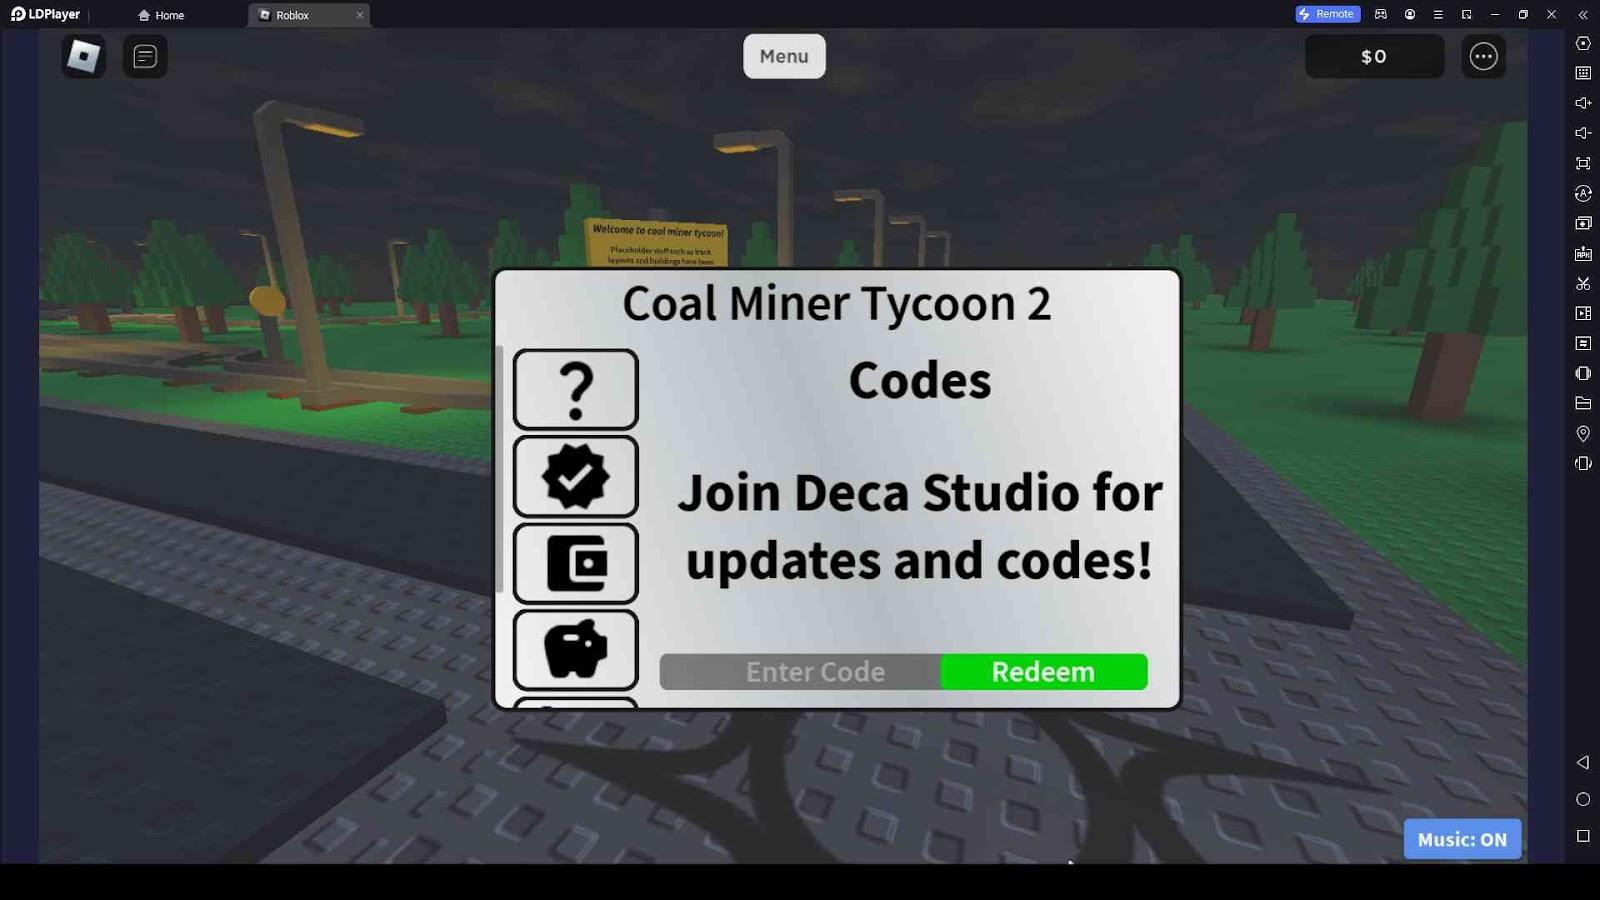 Mining Tycoon, Roblox Wiki